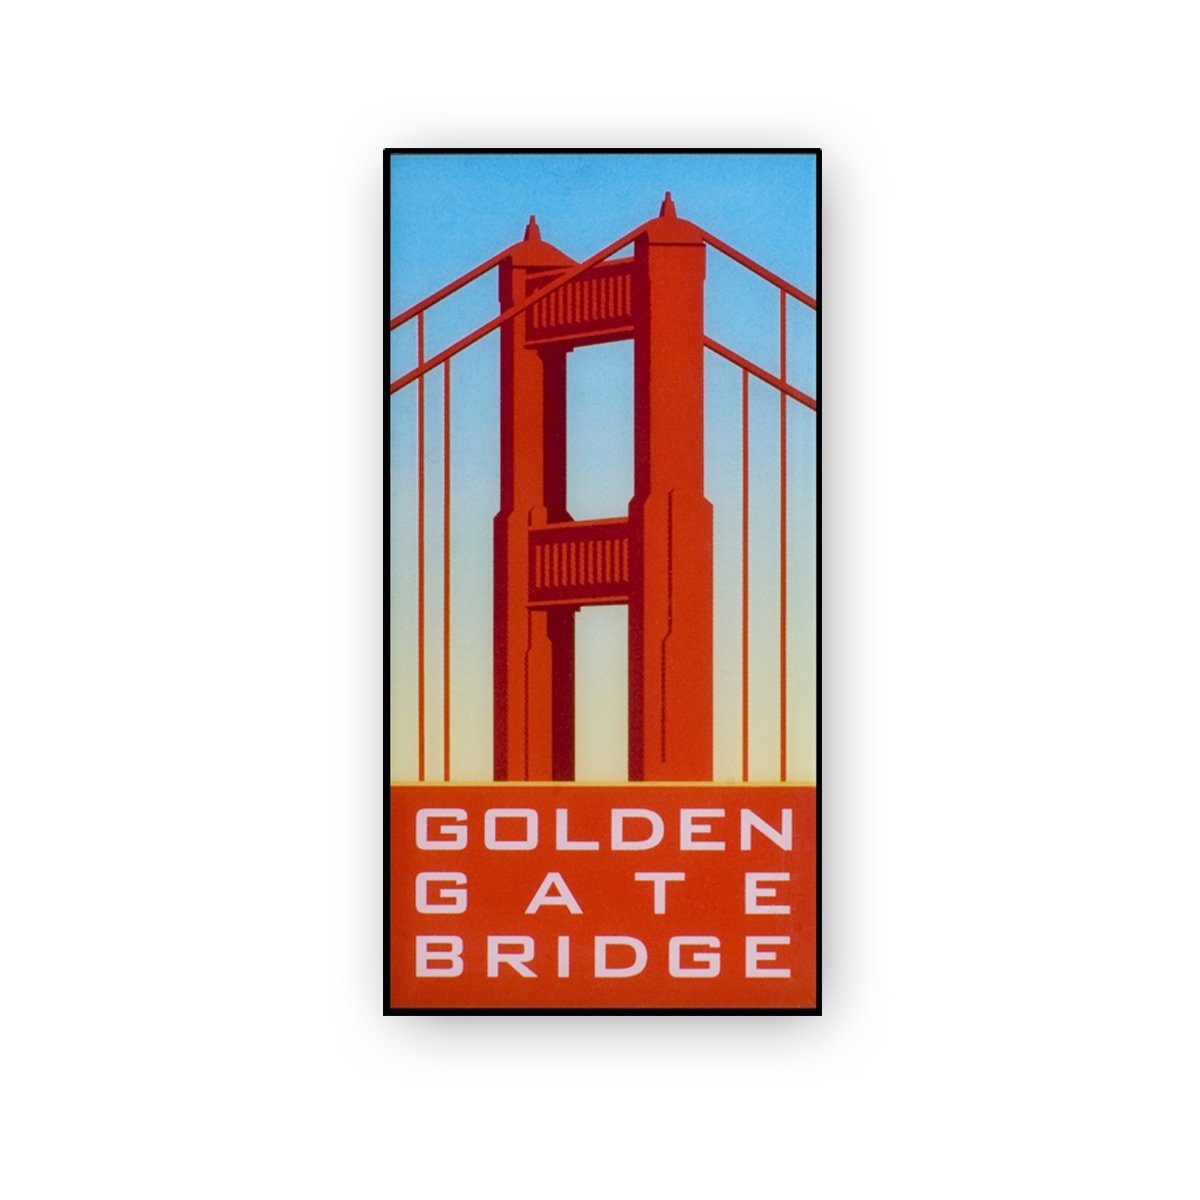 Multicolor vintage-inspired lapel pin featuring Golden Gate Bridge Art Deco tower design.